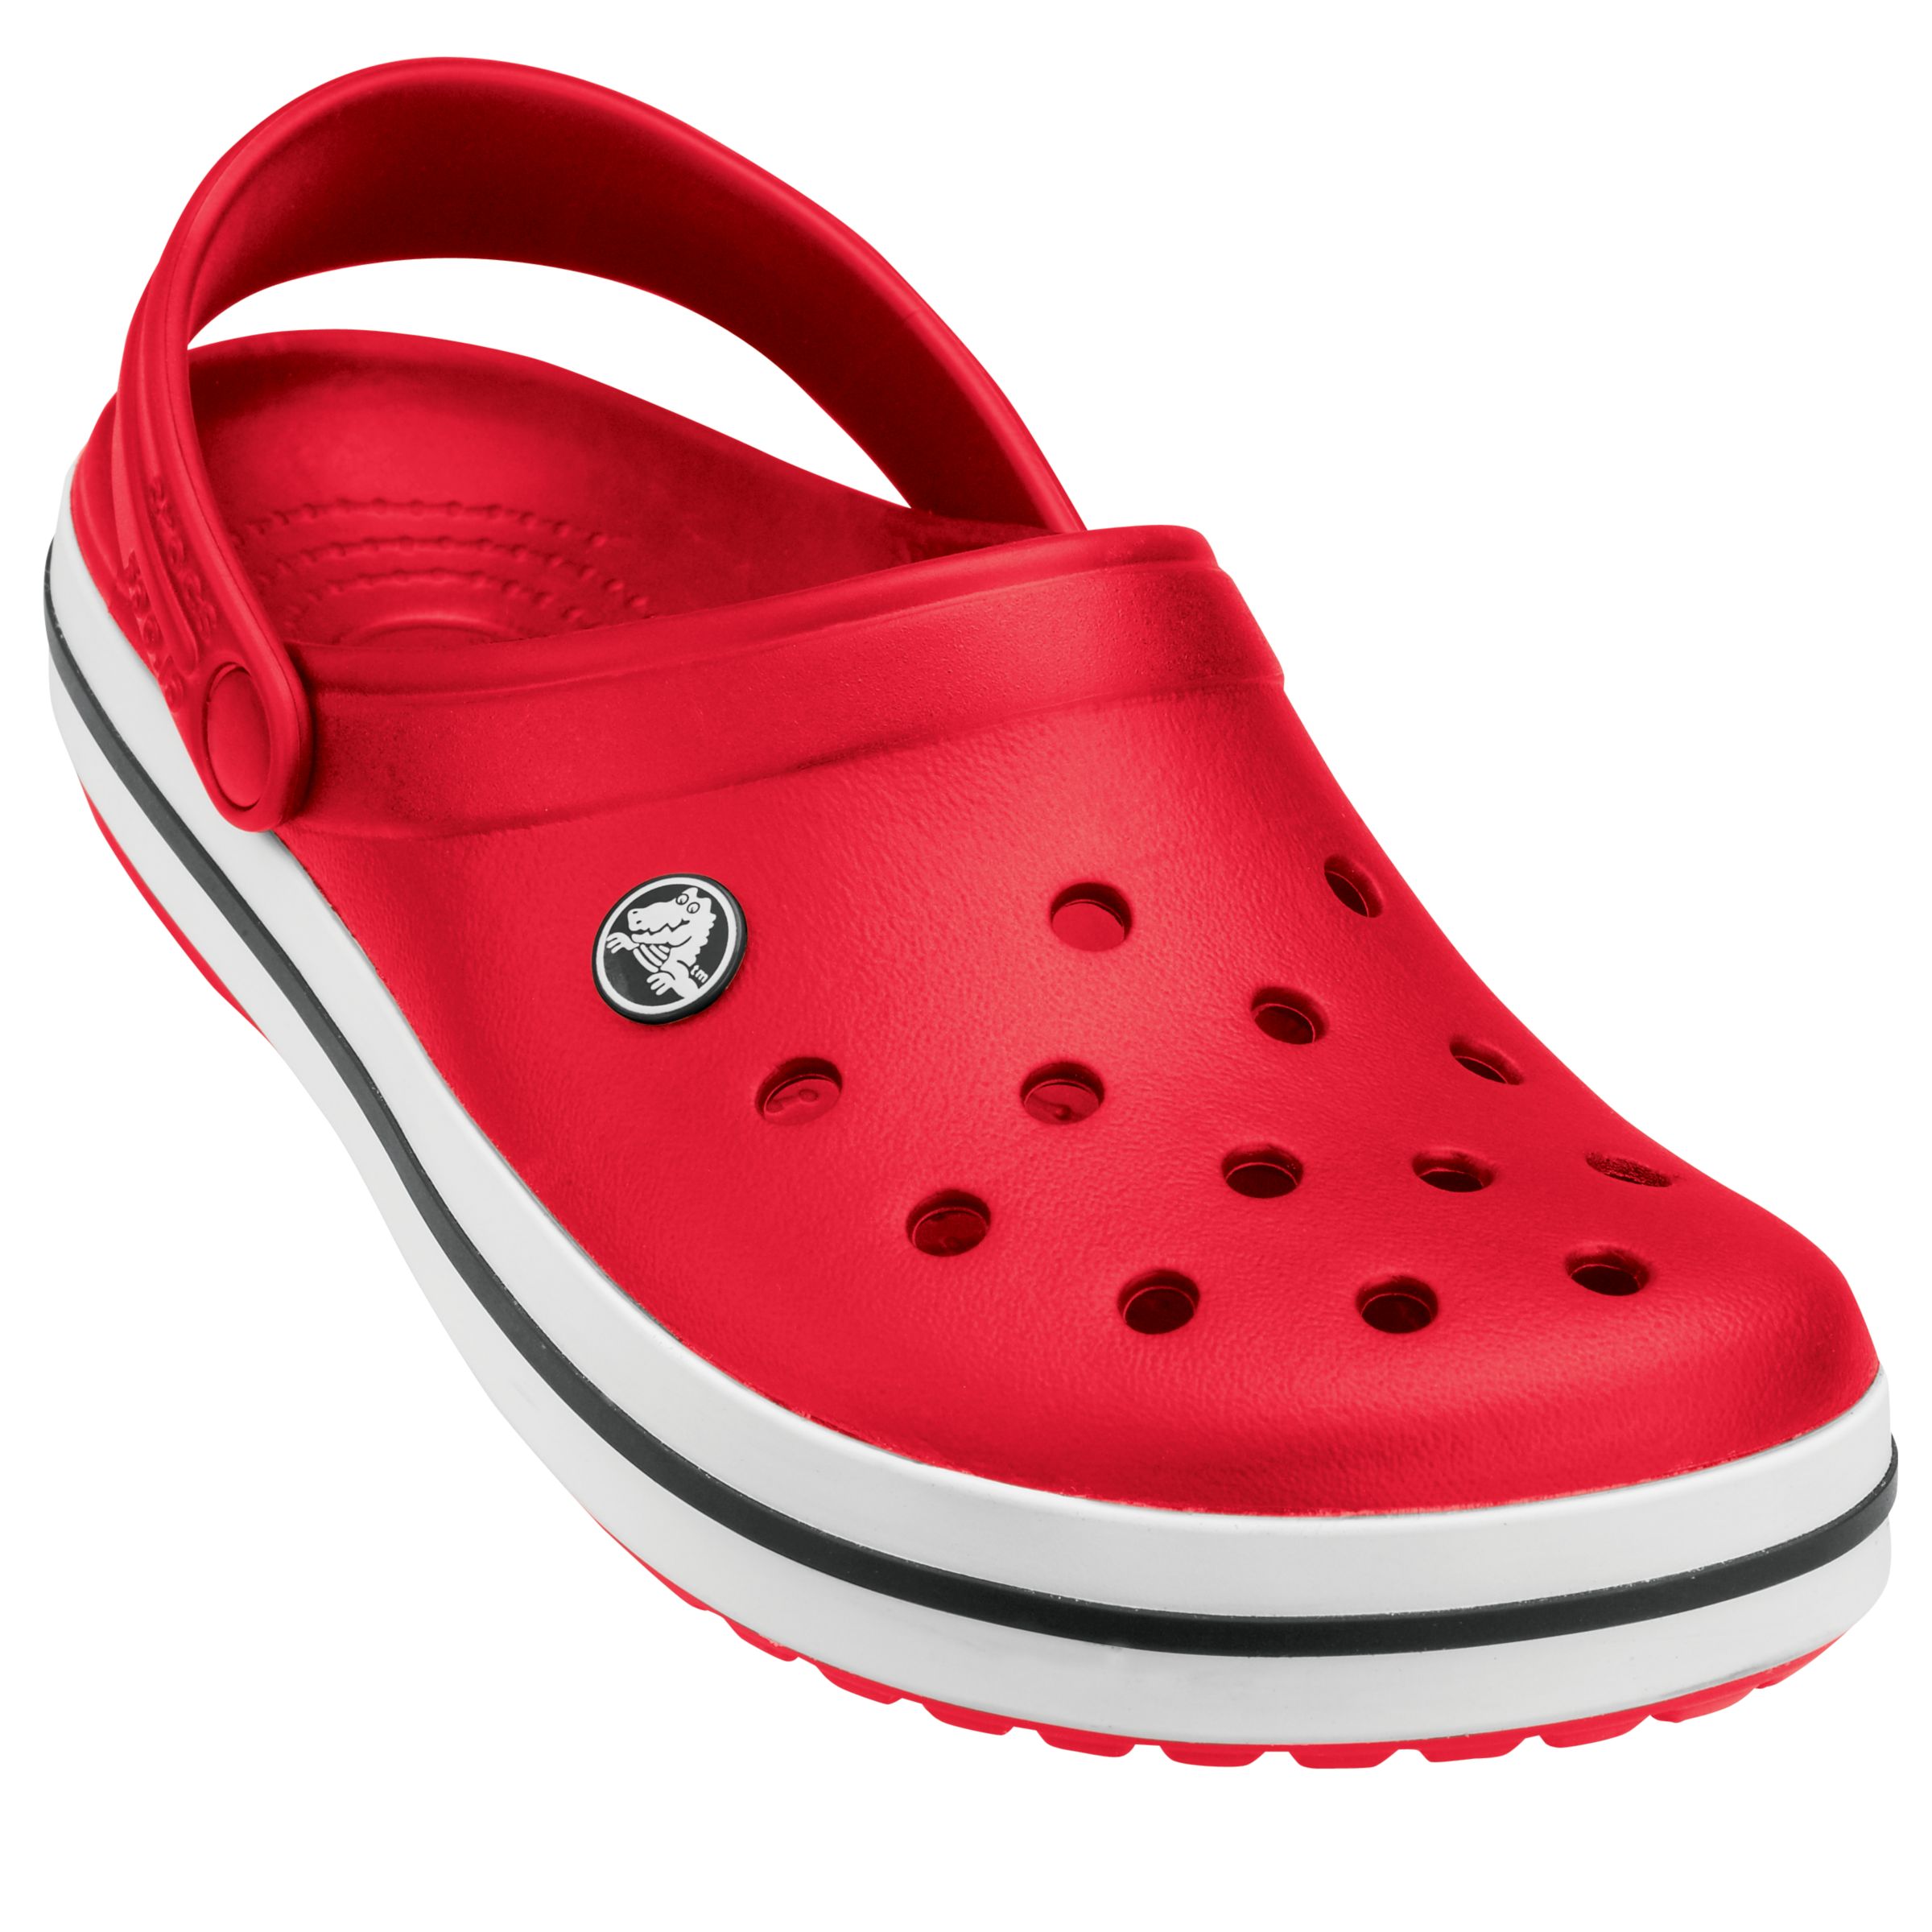 Crocs Crocband Sandals, Red 362575